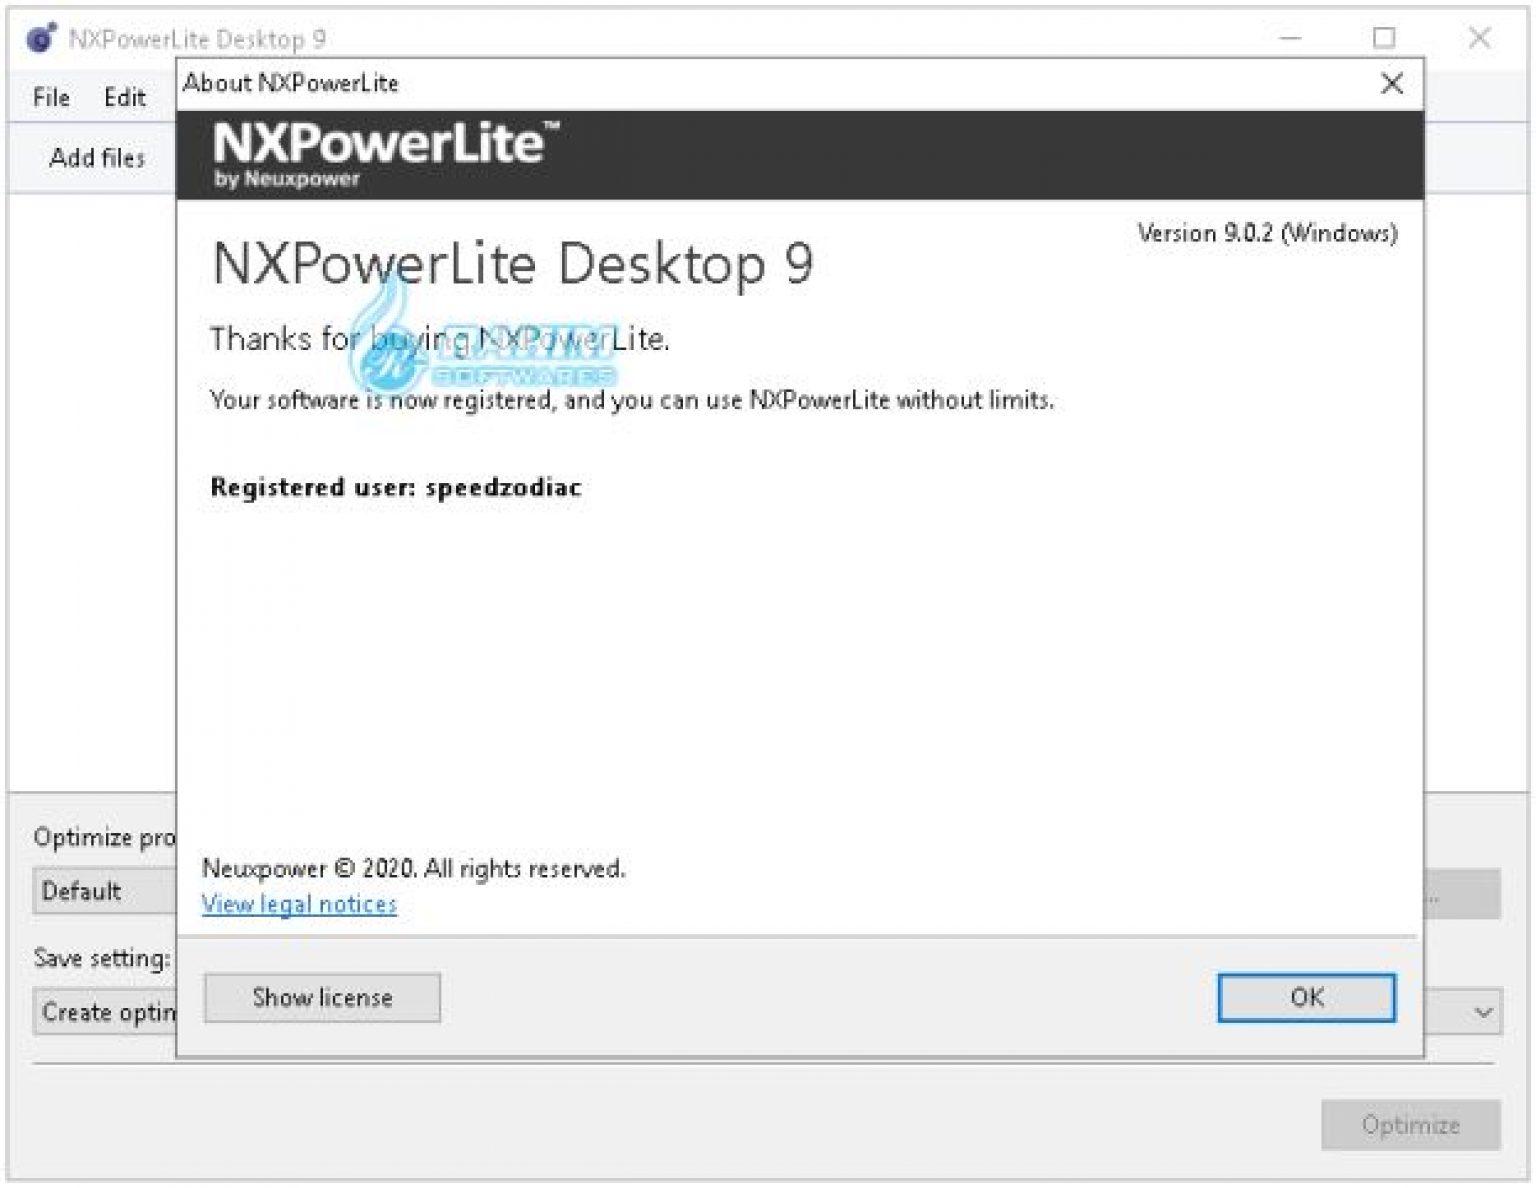 NXPowerLite Desktop 10.0.1 instal the last version for ipod